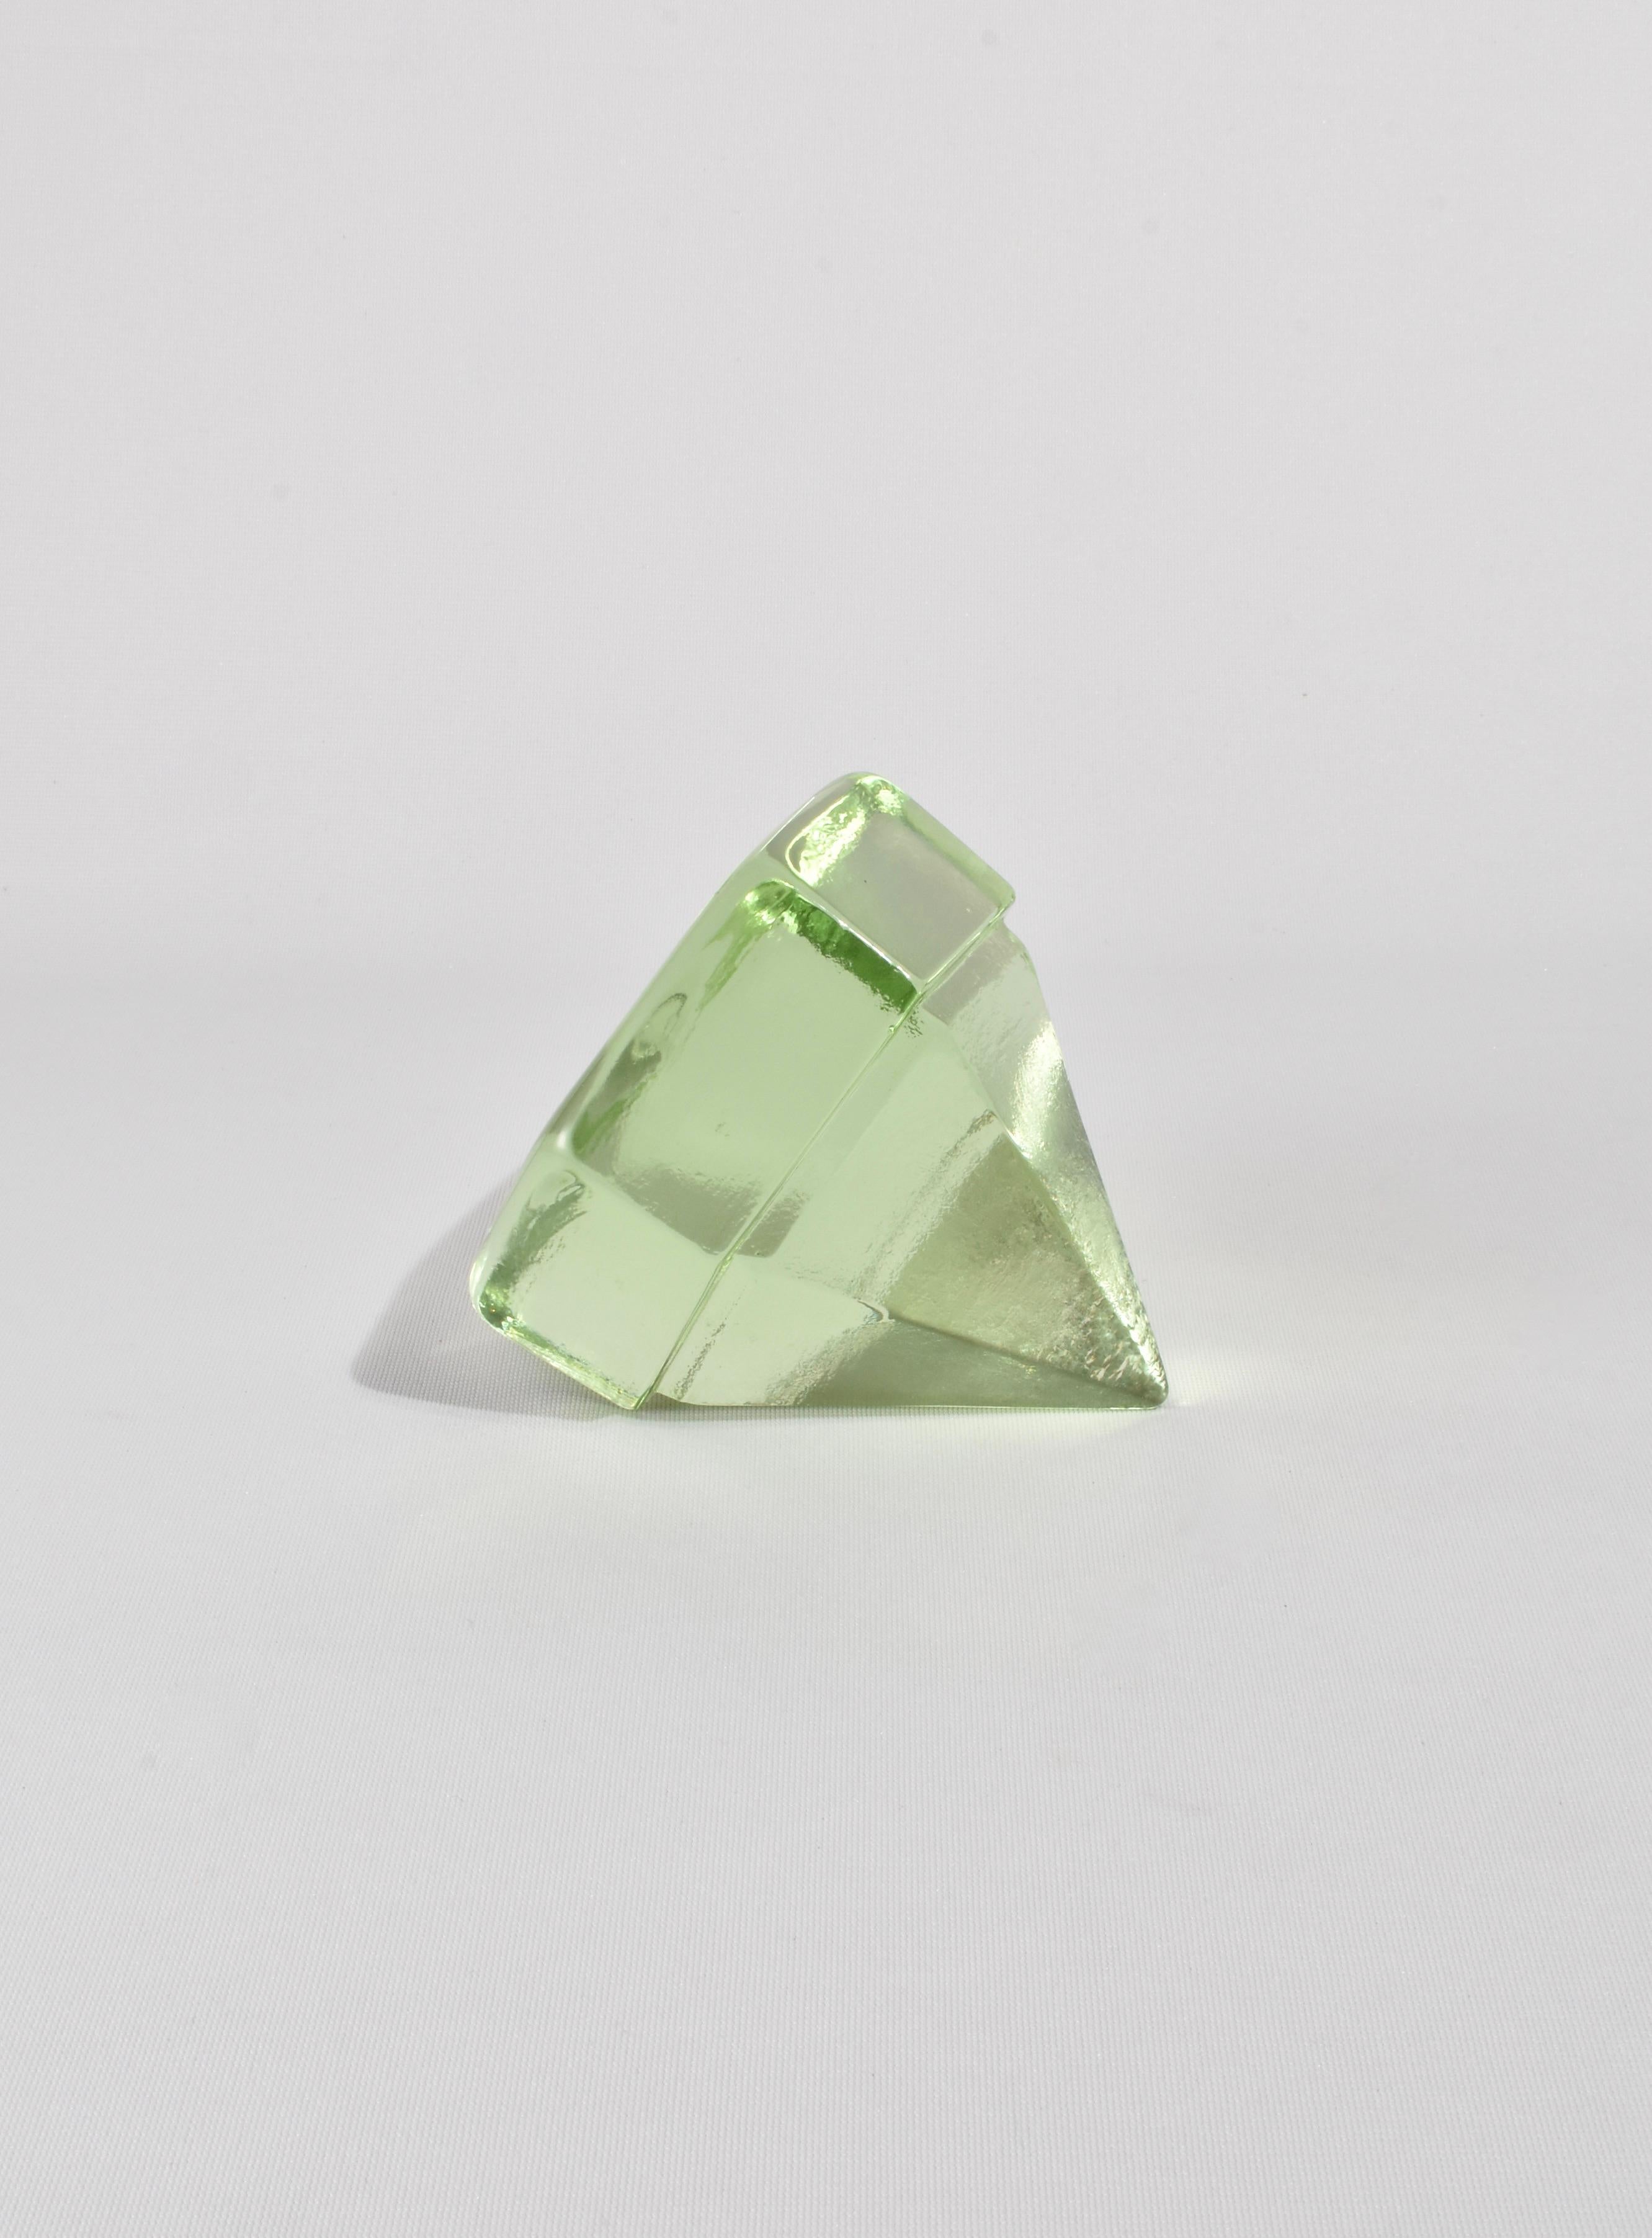 20th Century Green Glass Prism